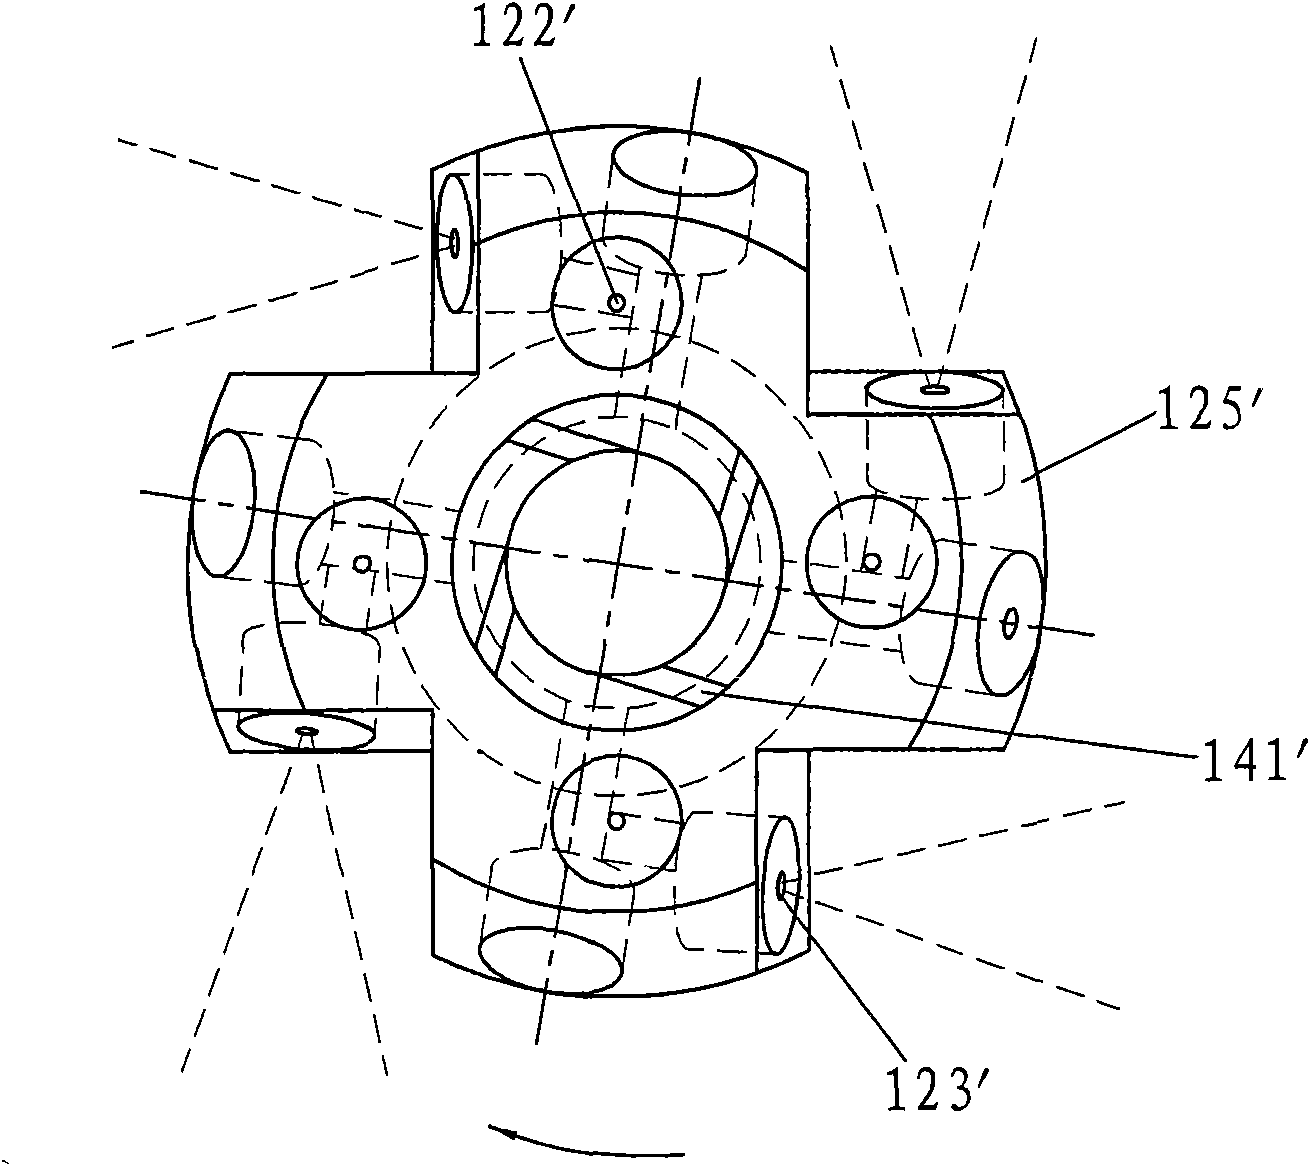 Jet-driven rotary type spraying head